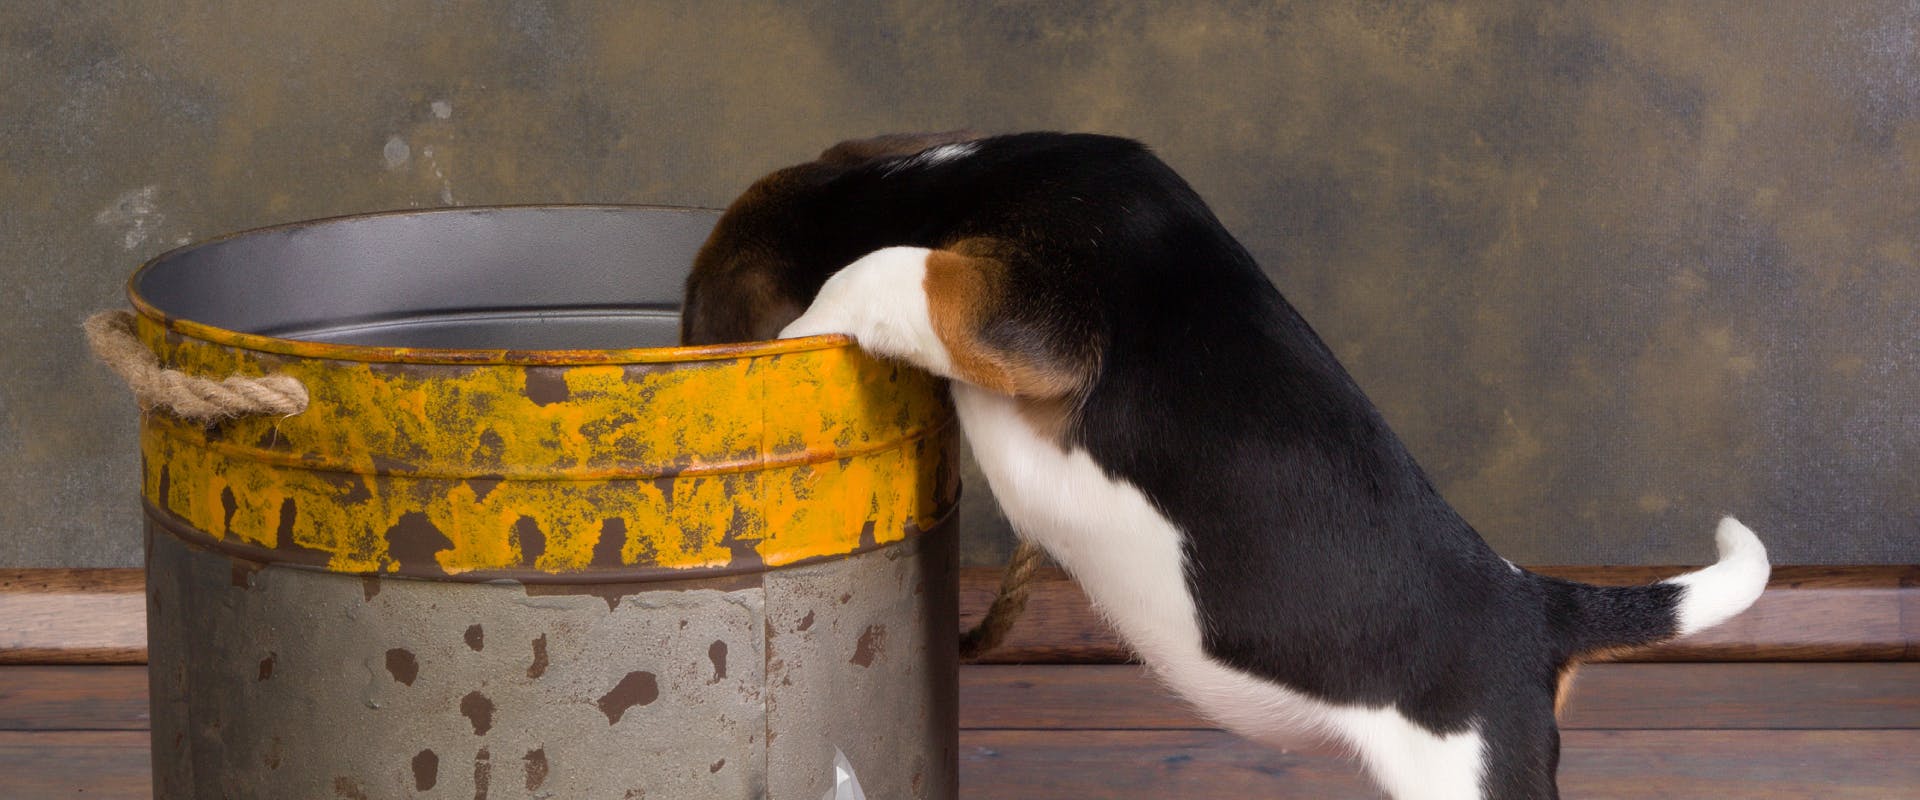 A puppy looks into a bin.